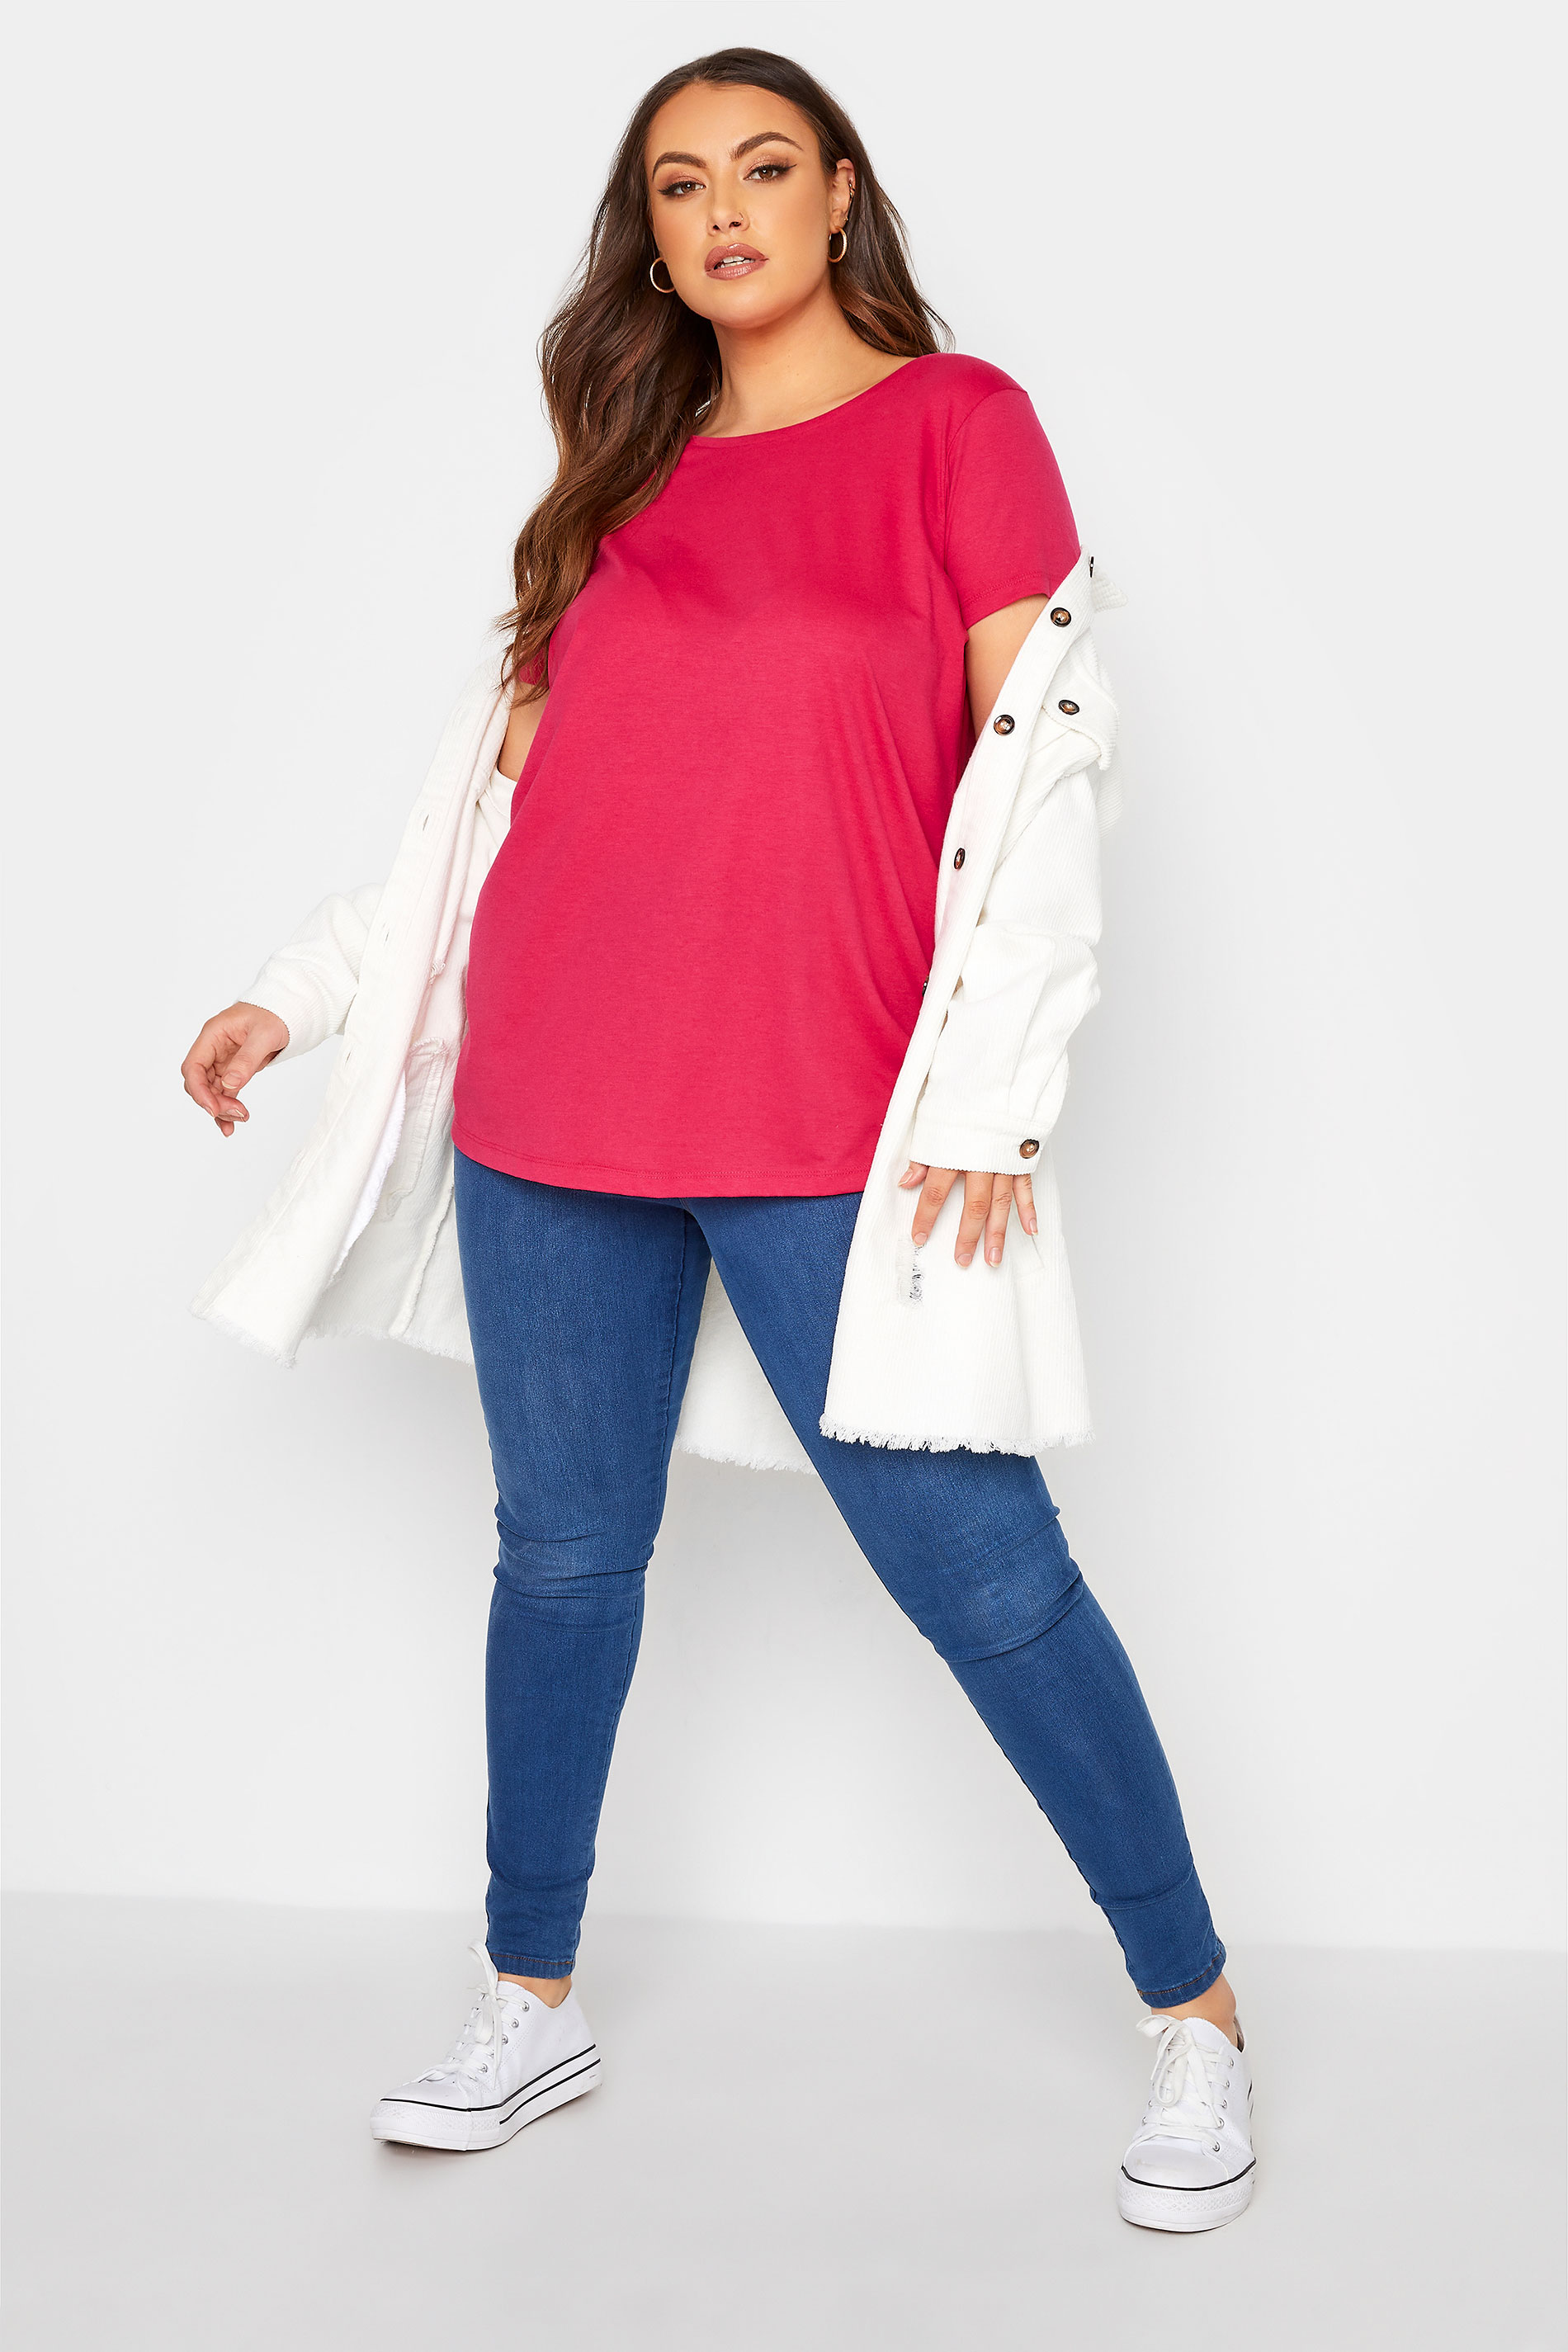 Grande taille  Tops Grande taille  T-Shirts Basiques & Débardeurs | T-Shirt Rose Flashy en Jersey - FH05210